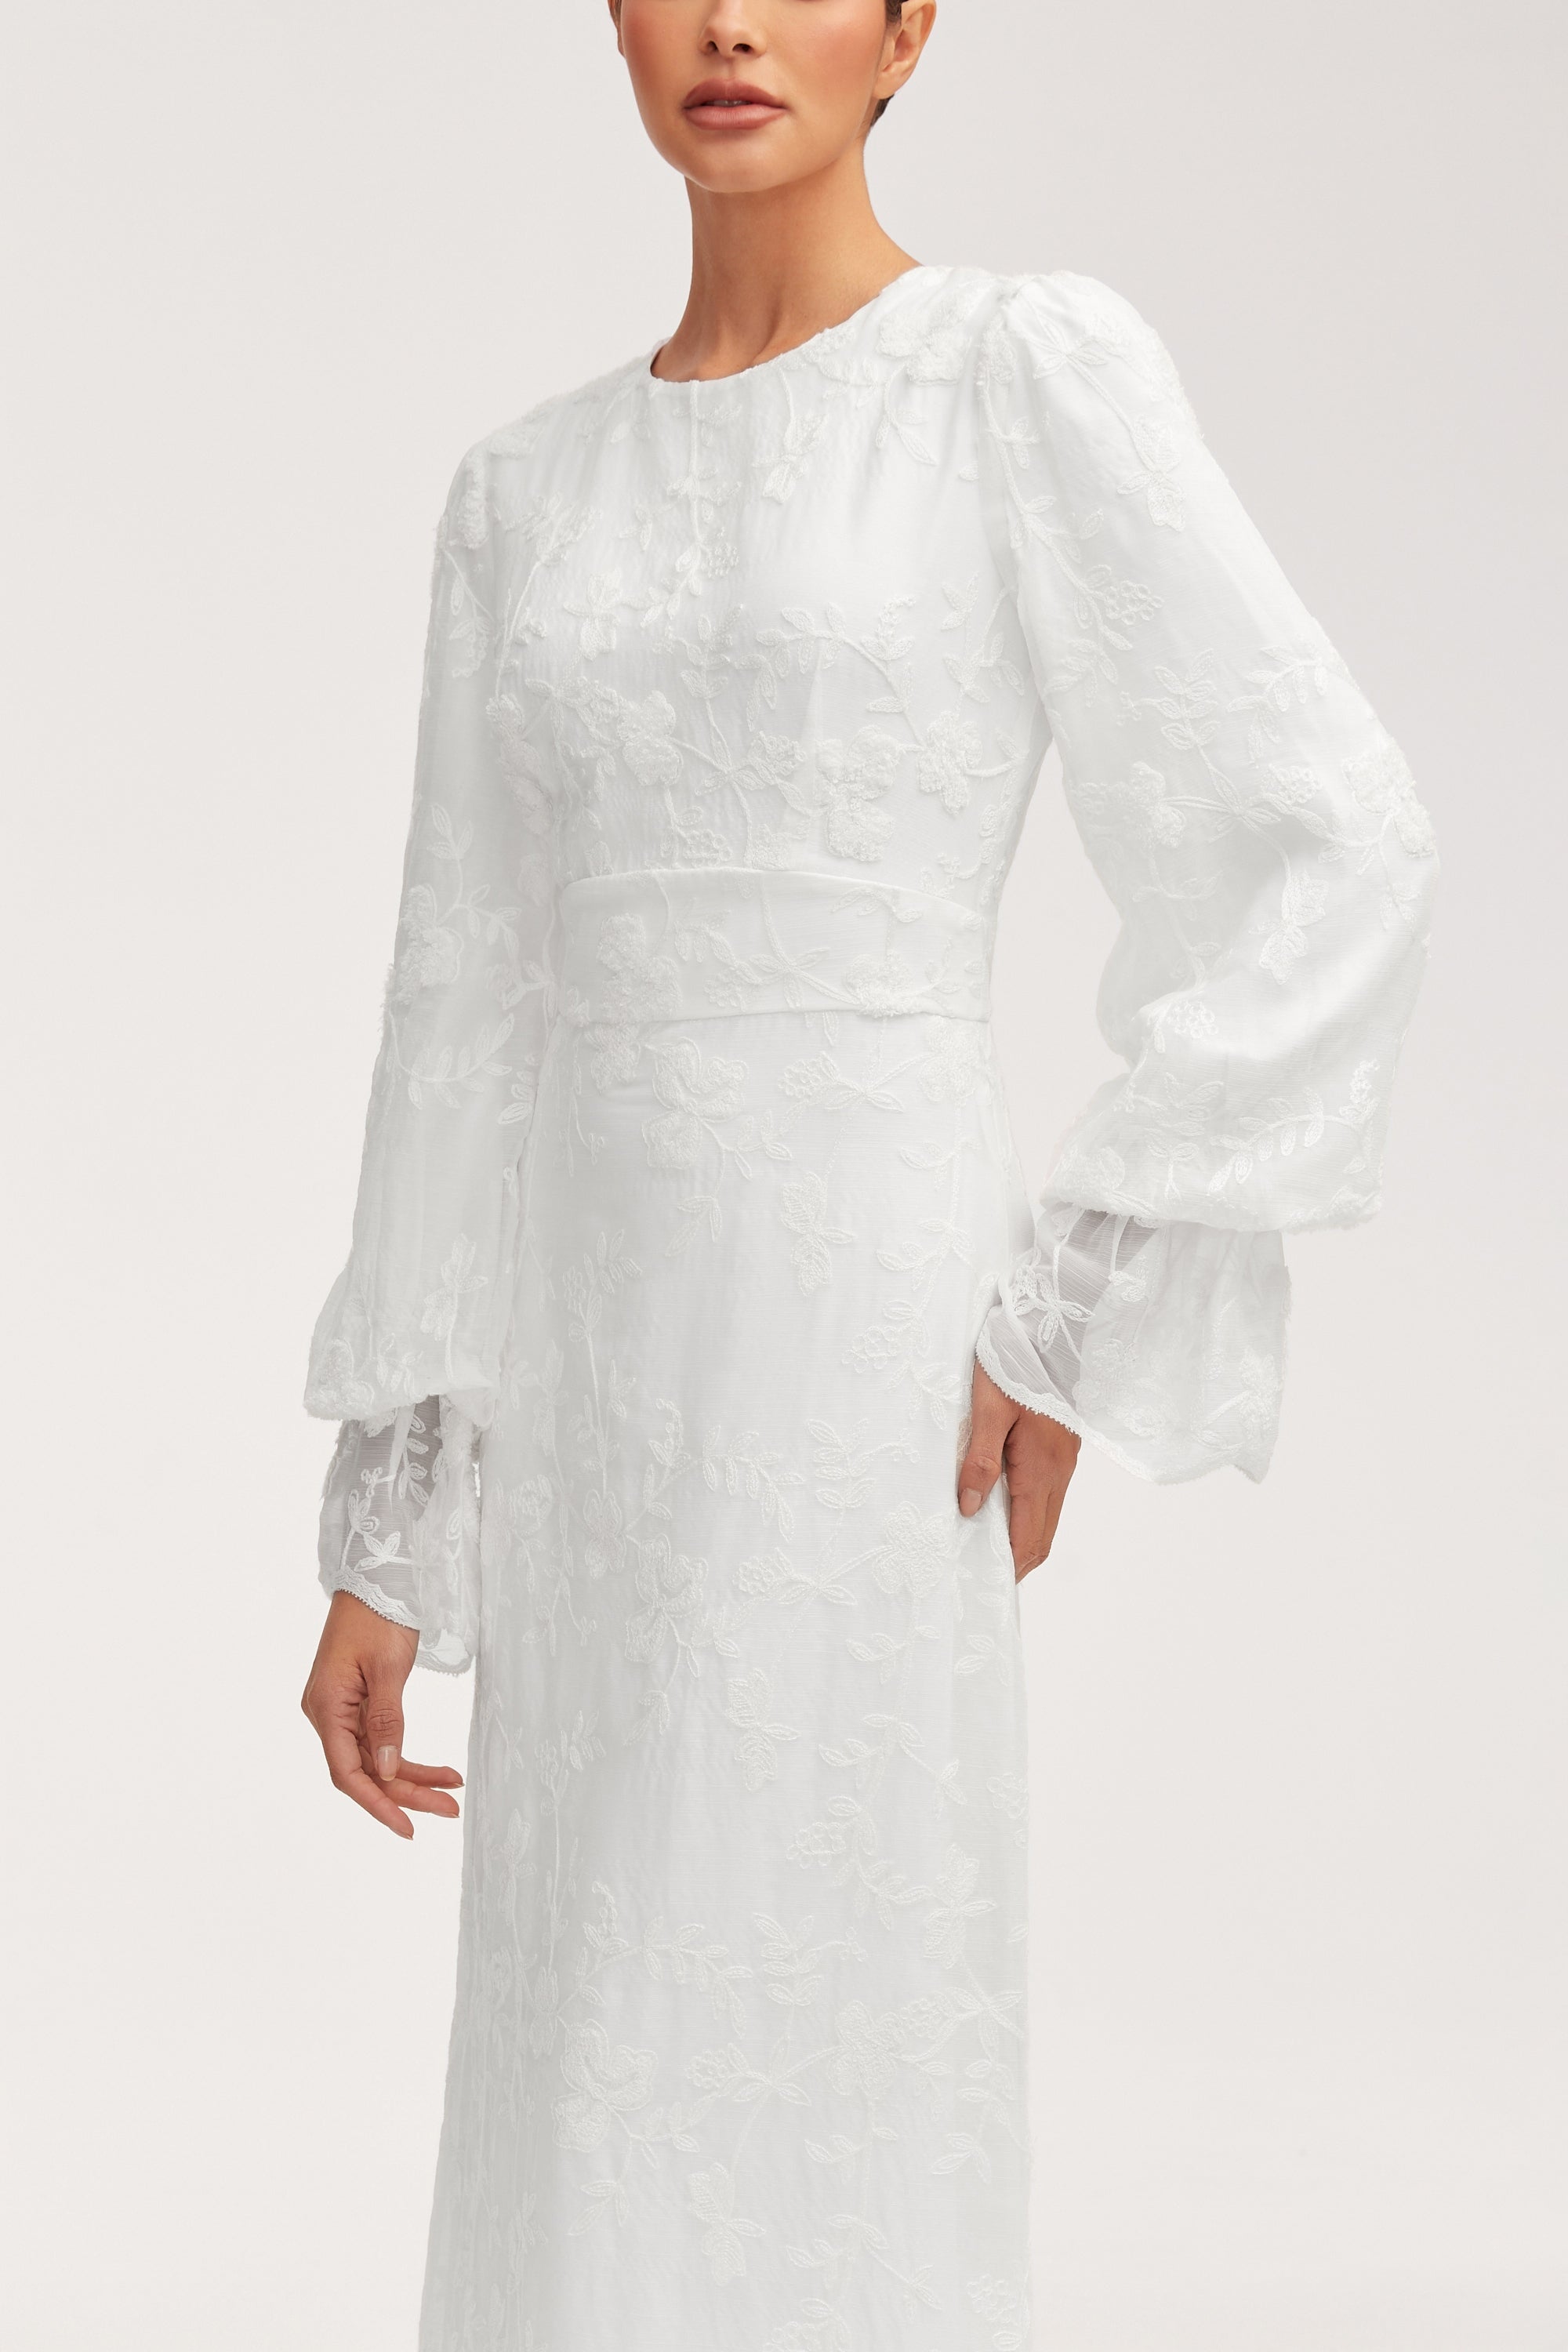 Romaissa White Lace Maxi Dress Clothing saigonodysseyhotel 